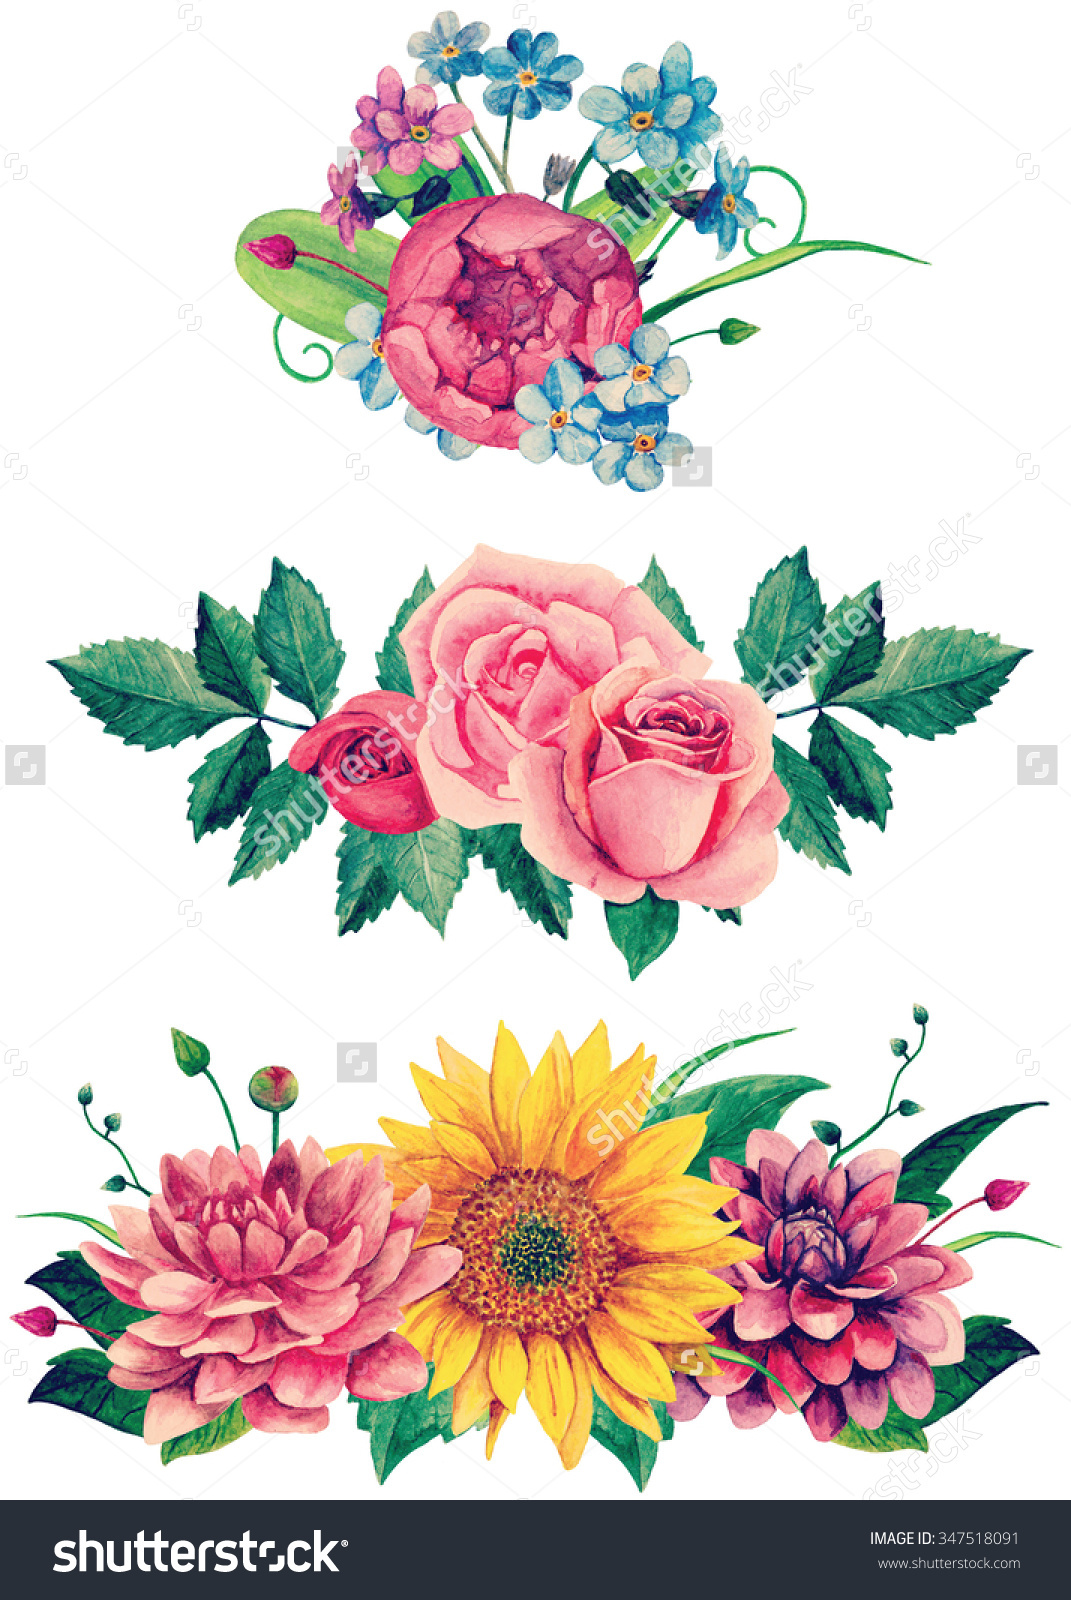 watercolor floral clipart - photo #42